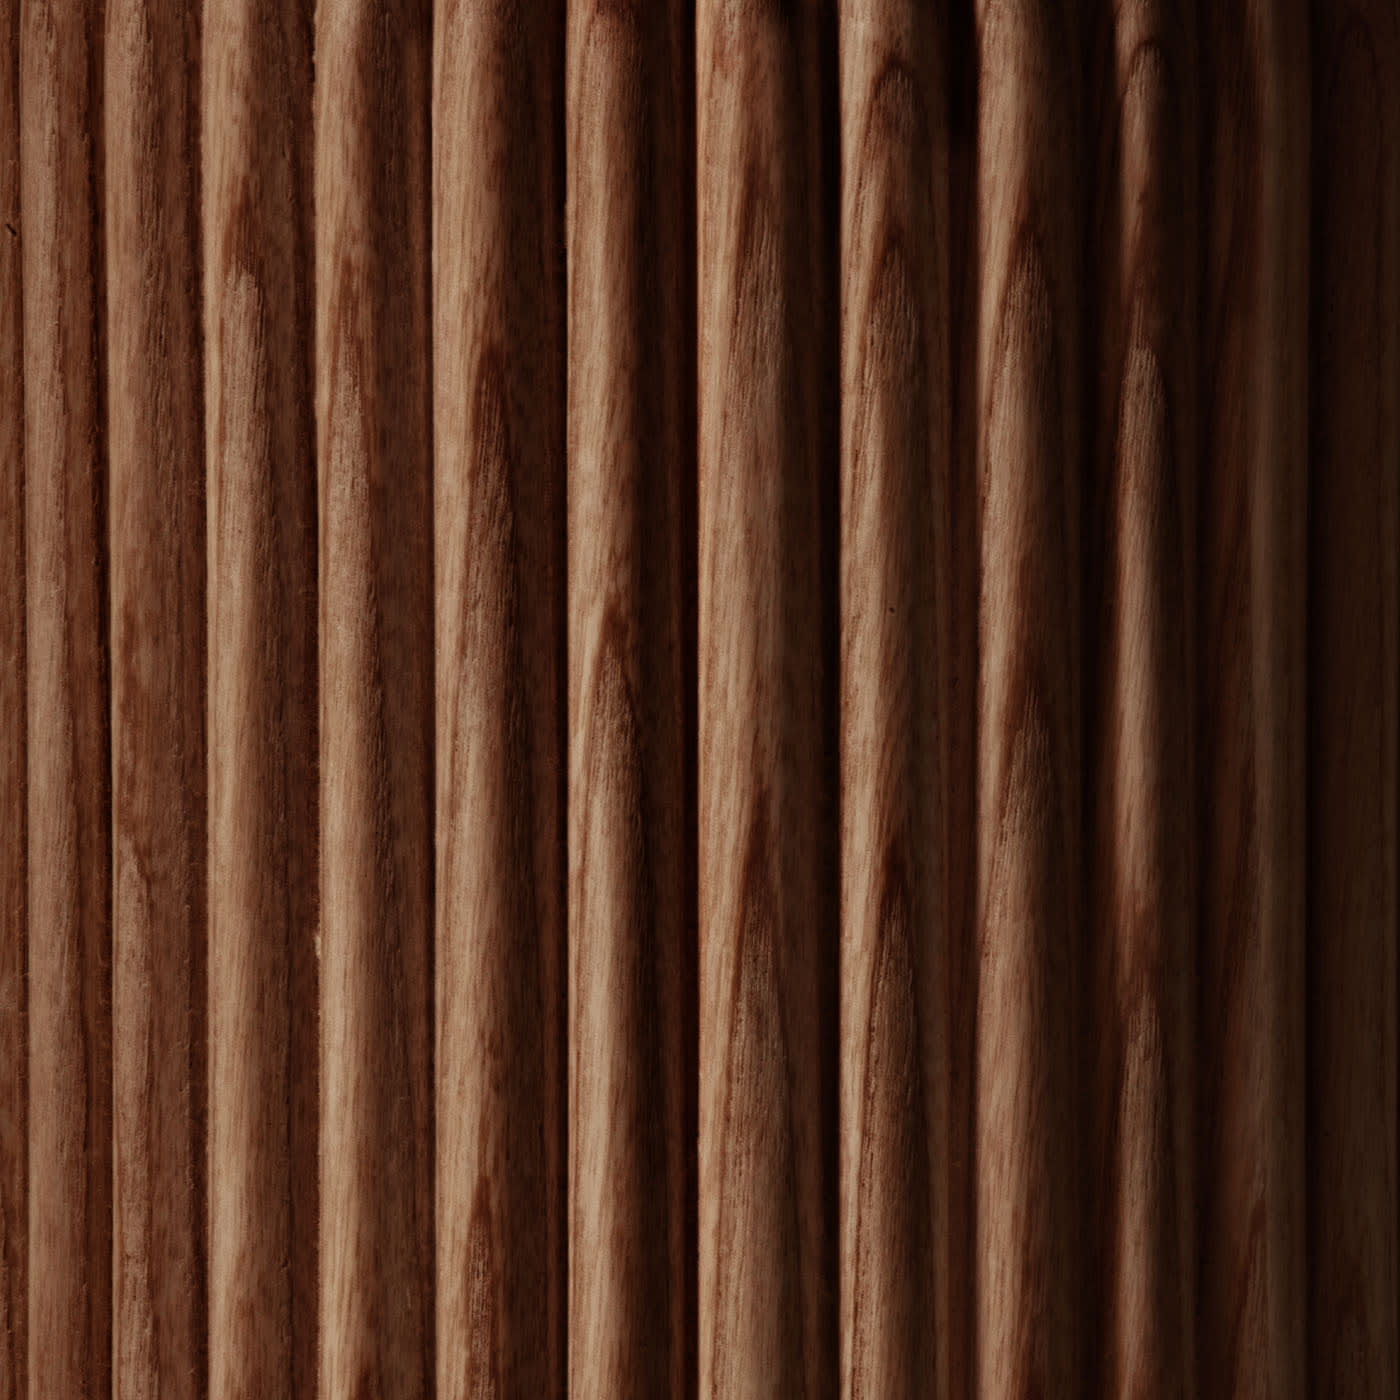 Capitello Brown Ash Coffee Table ☞ Dimensions: Ø 40 cm